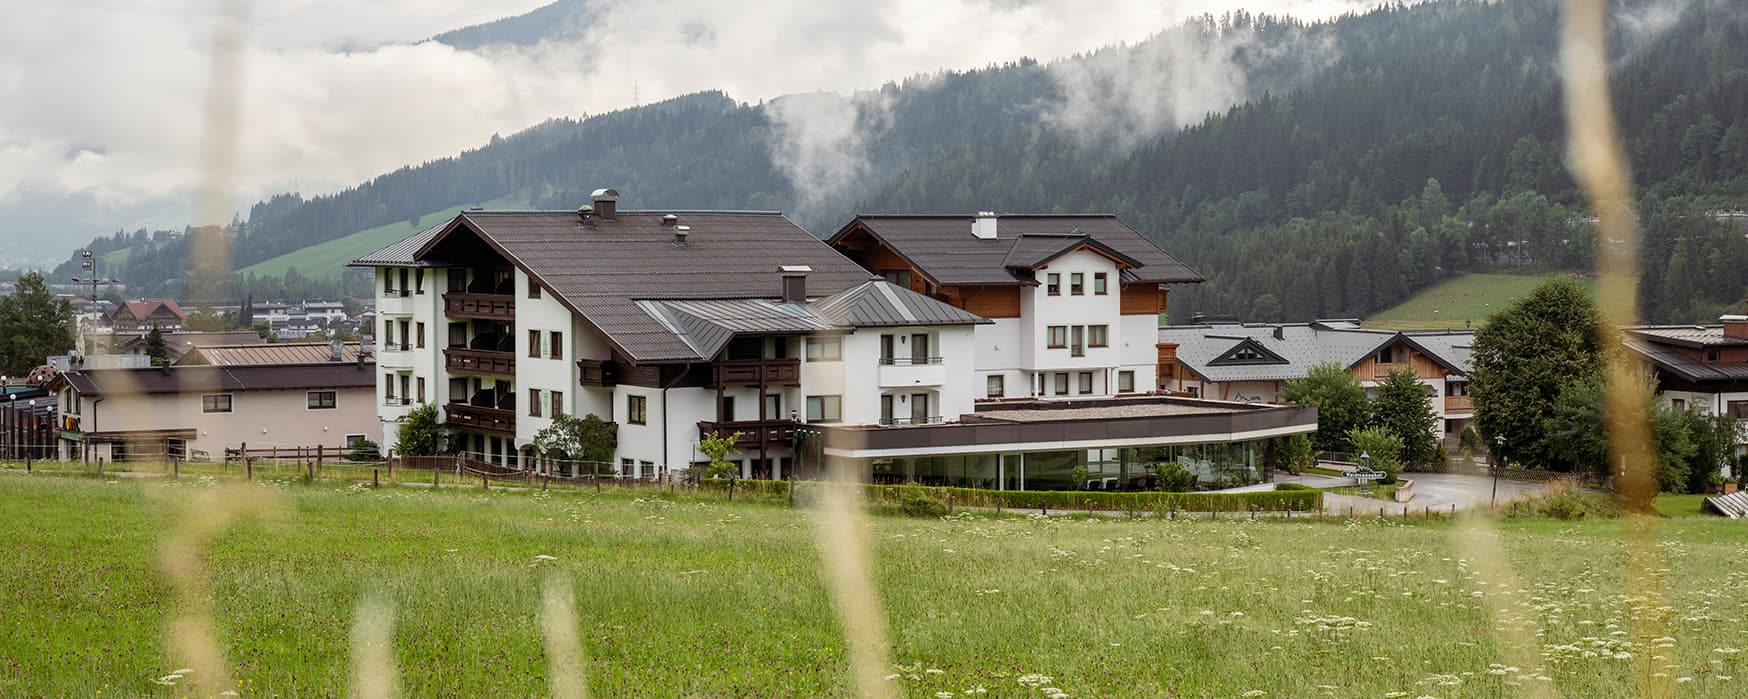 4-Sterne Hotel Waidmannsheil in Flachau in Top-Lage